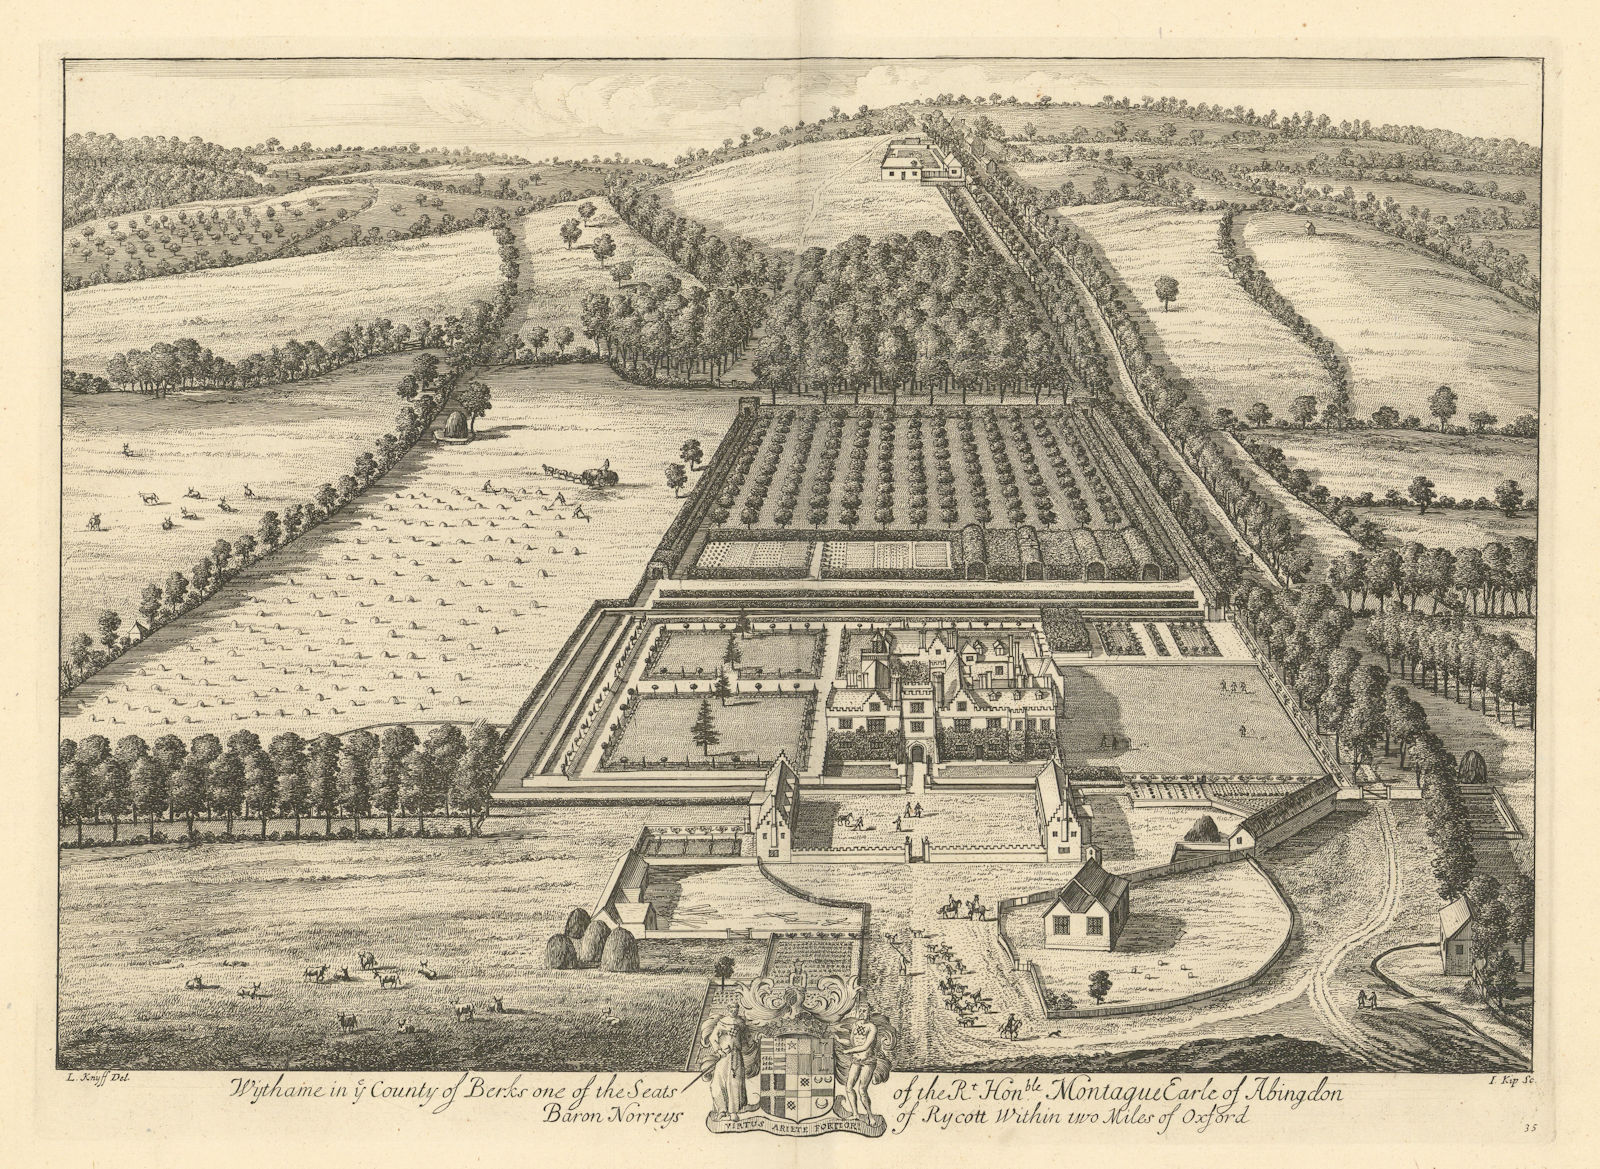 Wytham Abbey, Oxford by Kip & Knyff. "Wythame in ye County of Berks" 1709